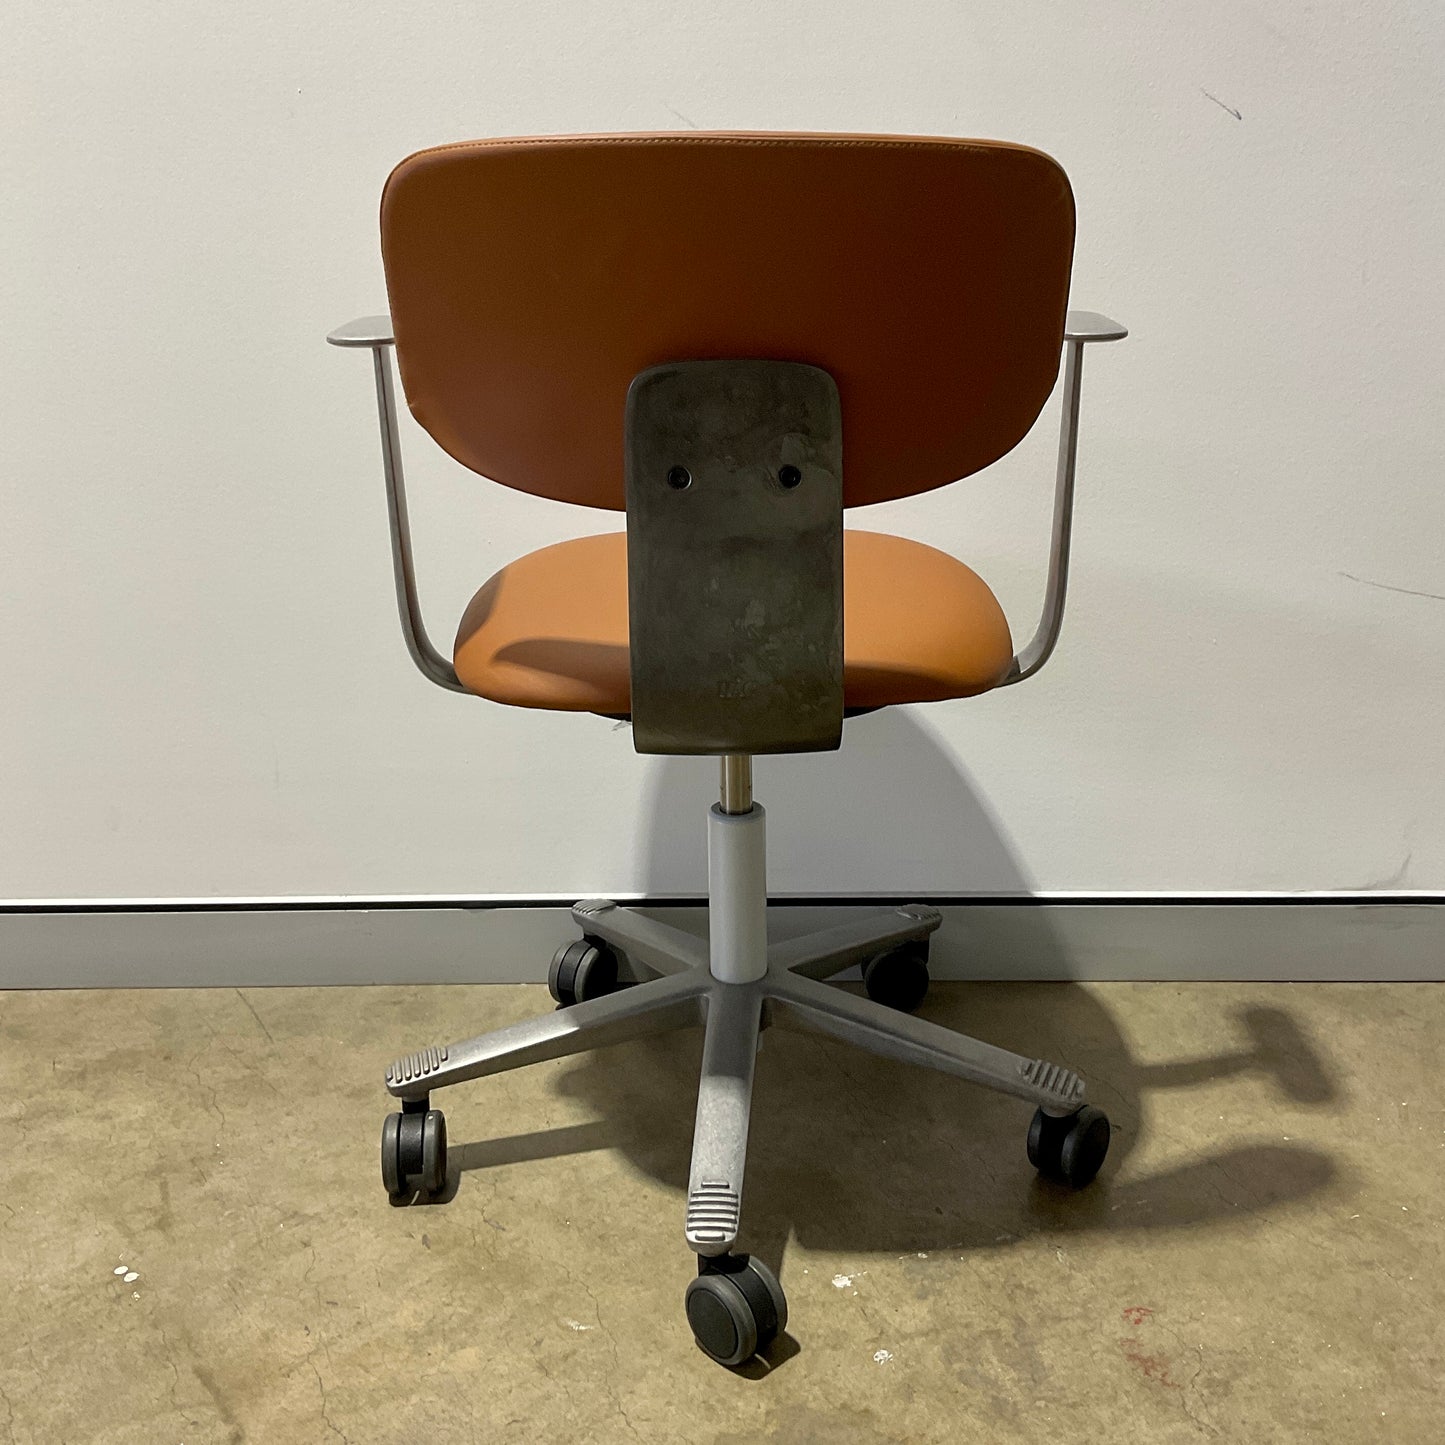 Tion 2160 Elmo Chair by HÅG